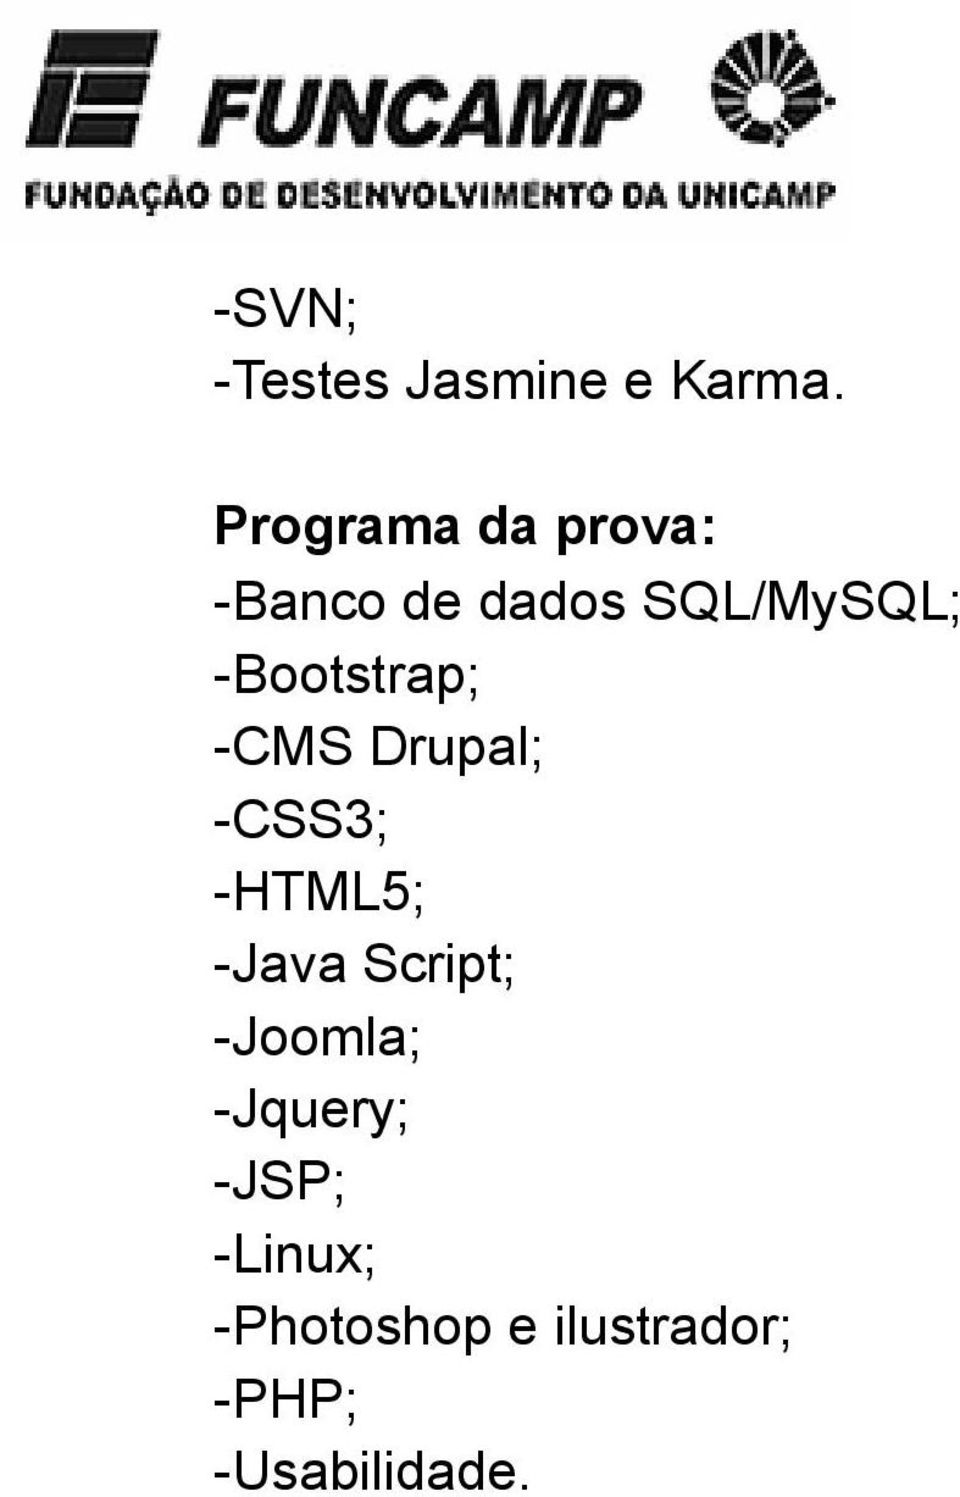 -Bootstrap; -CMS Drupal; -CSS3; -HTML5; -Java